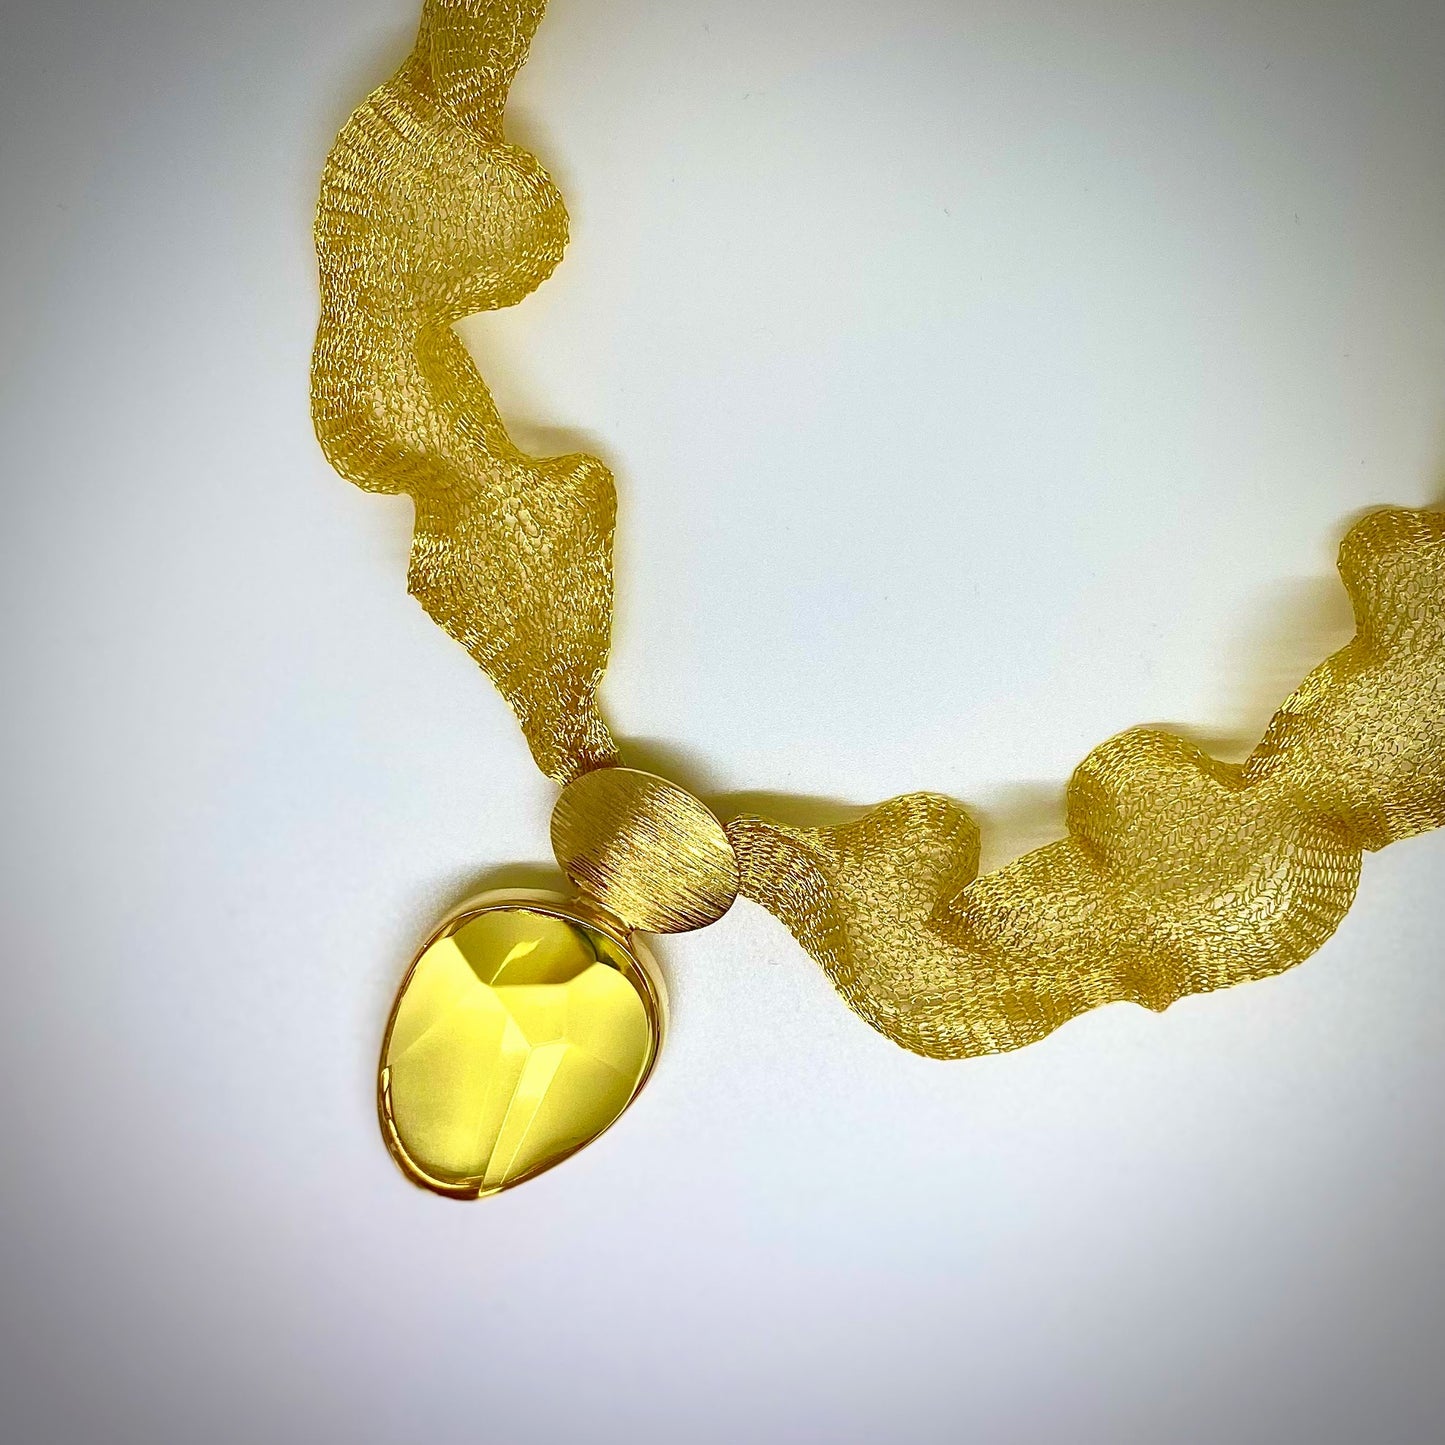 Handmade Yellow Amber Pendant Necklace